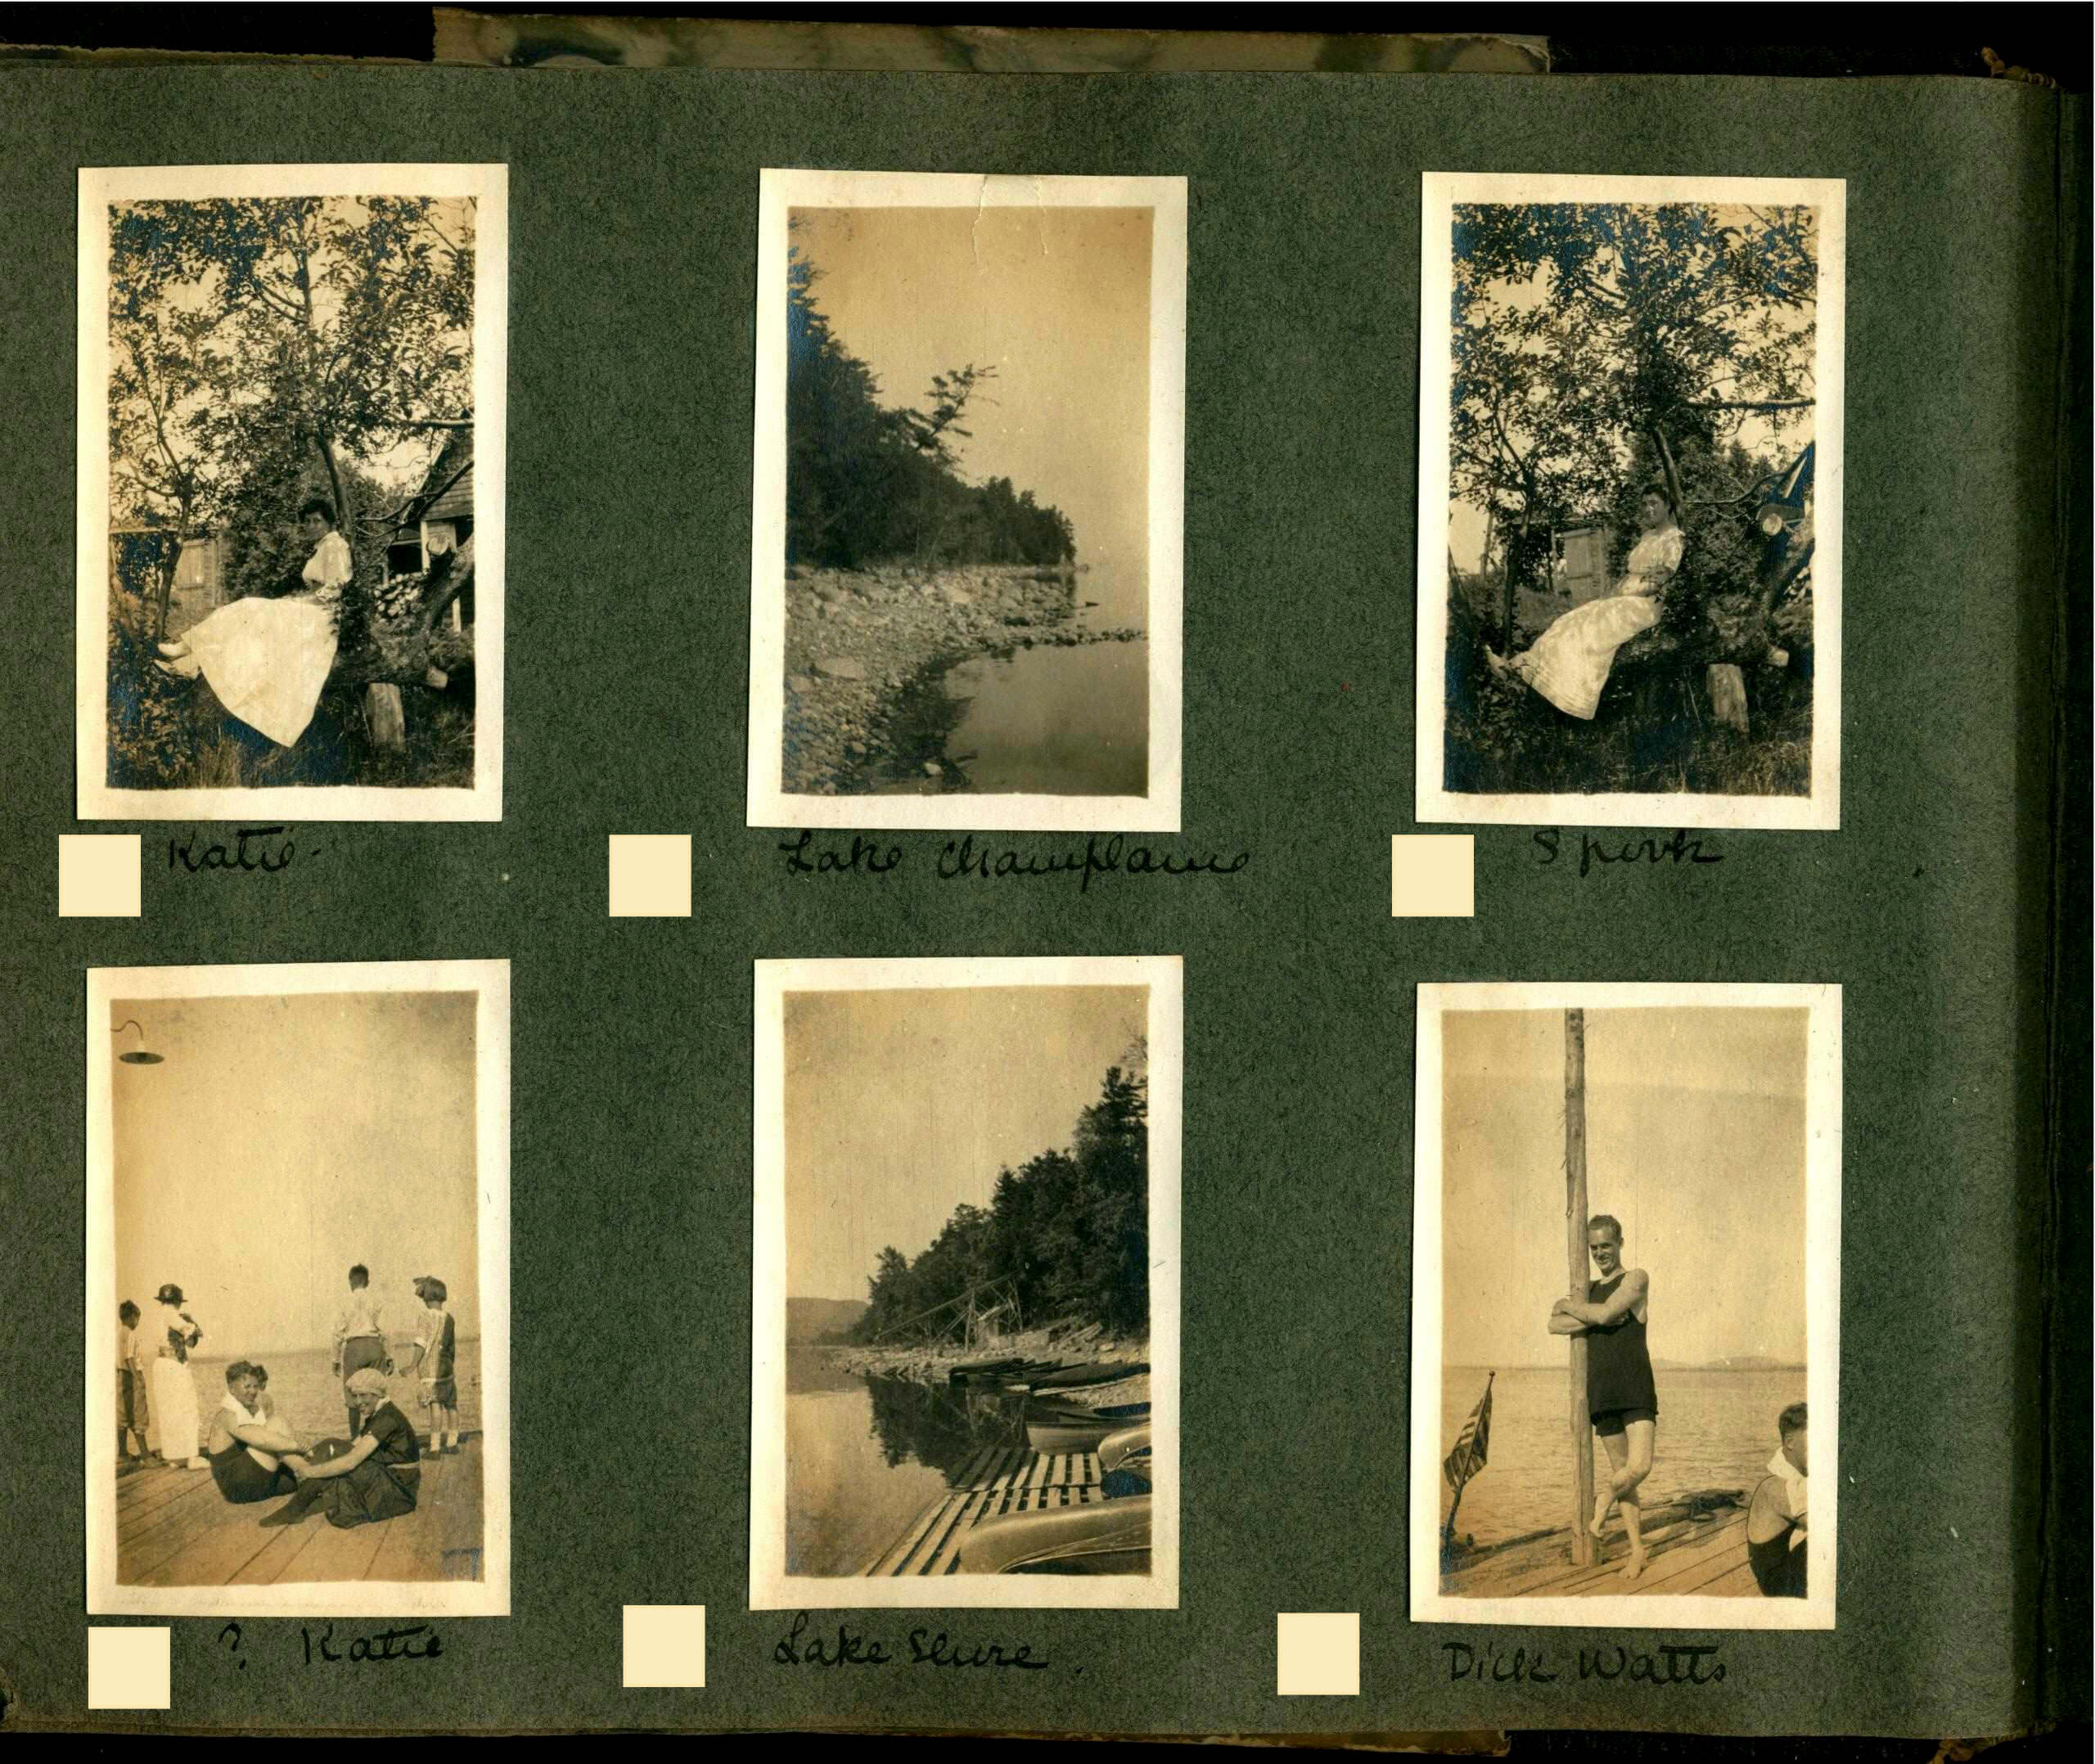 Photo Album circa 1915 Essex, NY -Page 14 of album (Shared by John Strangfeld)